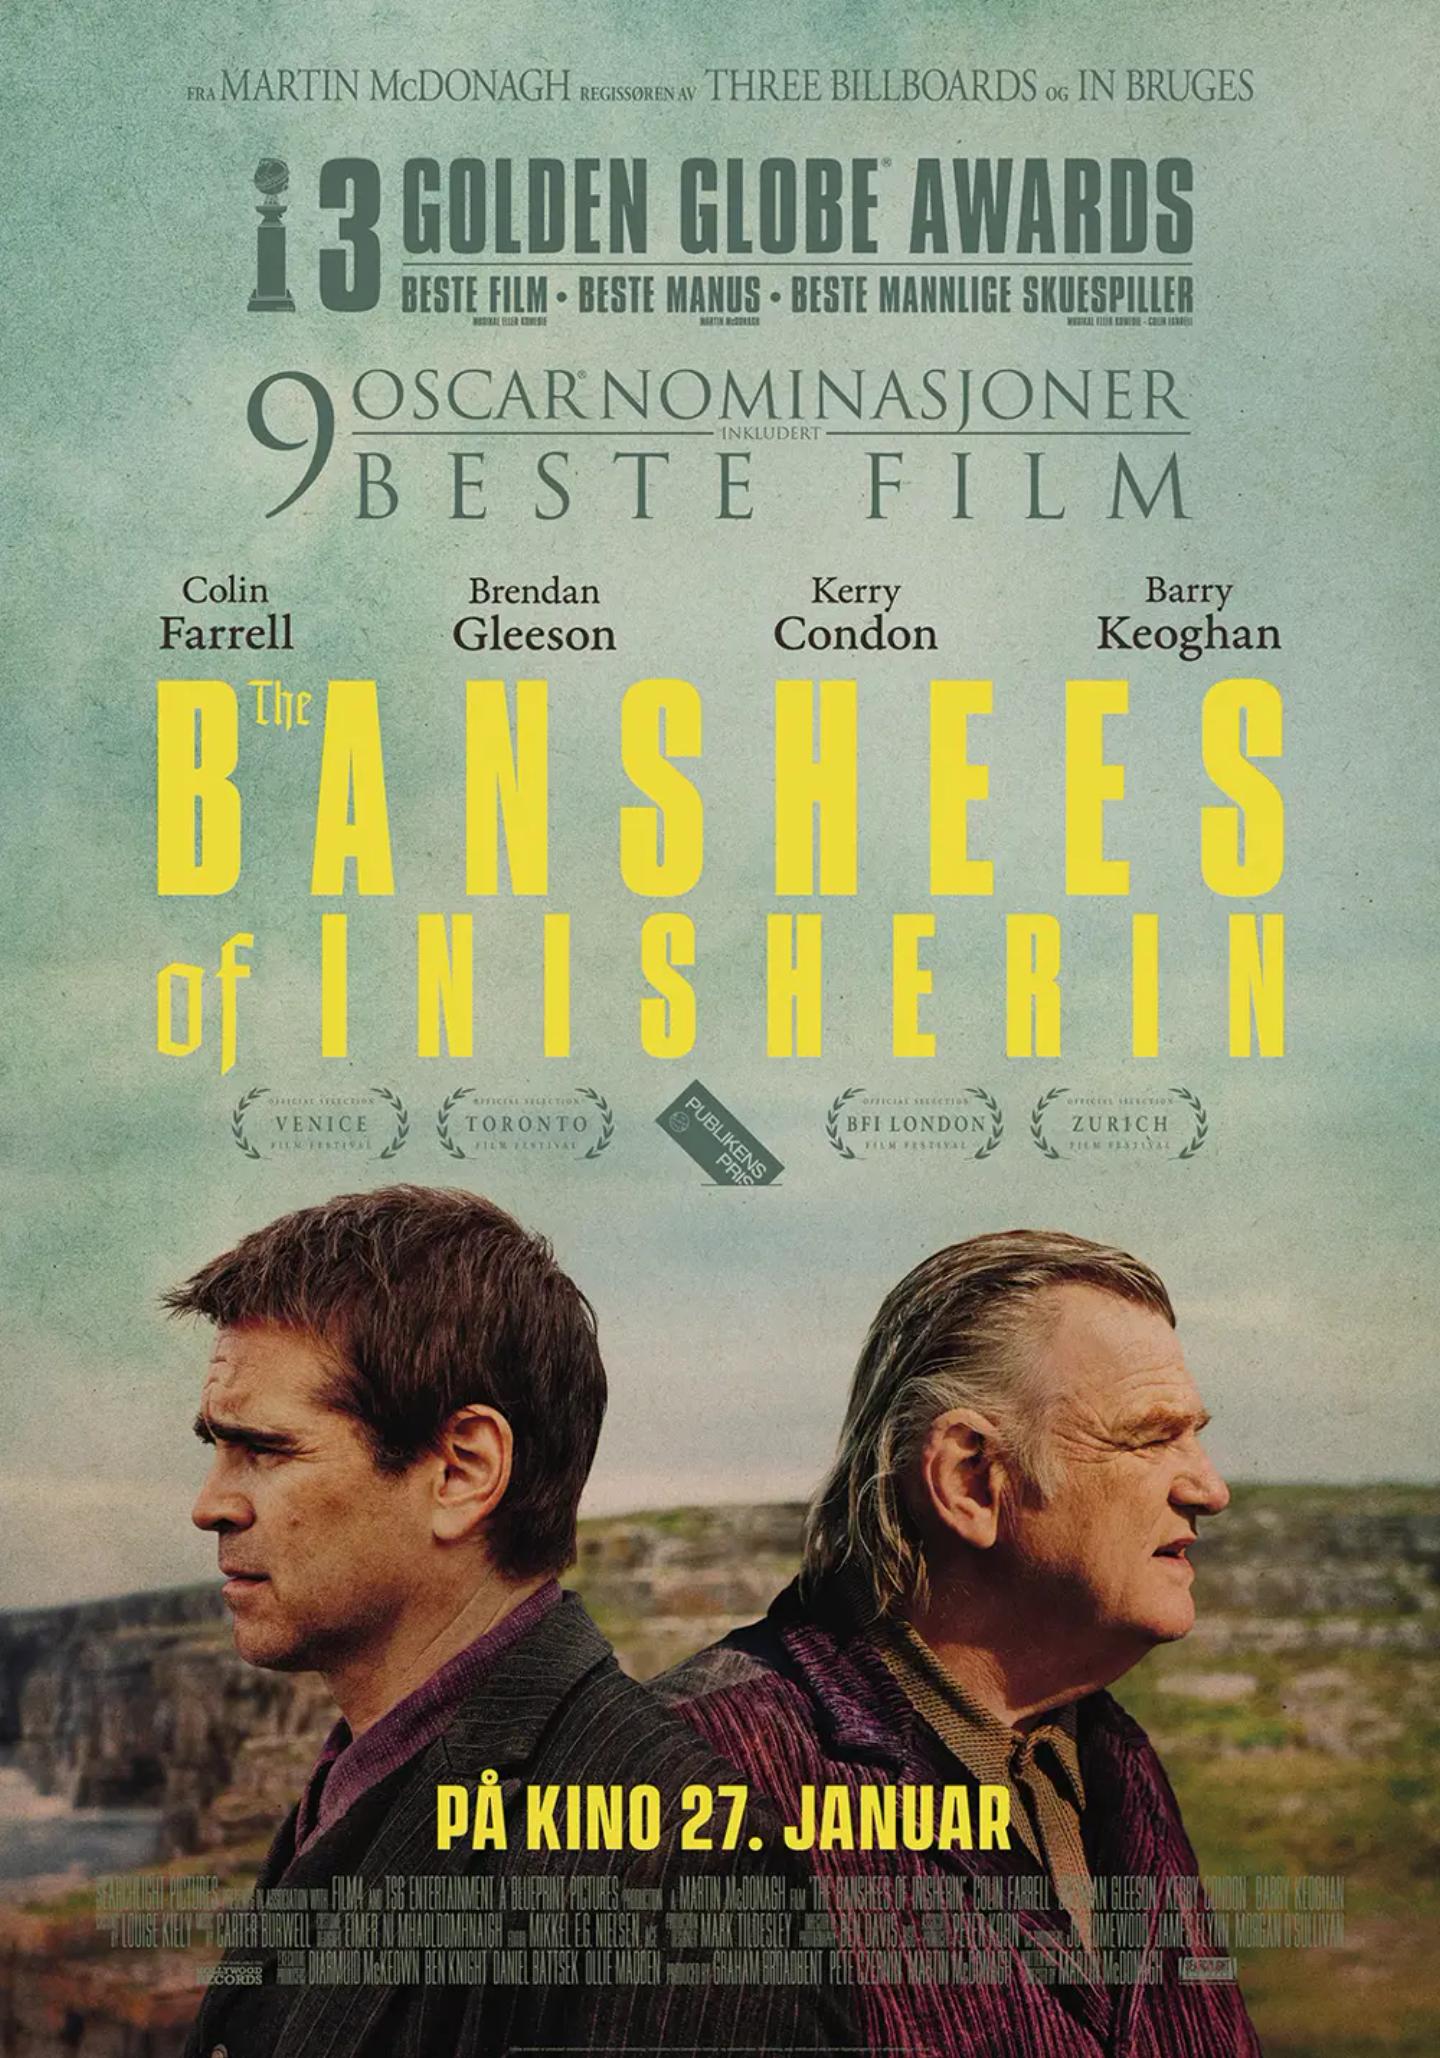 Plakat for 'The Banshees of Inisherin'